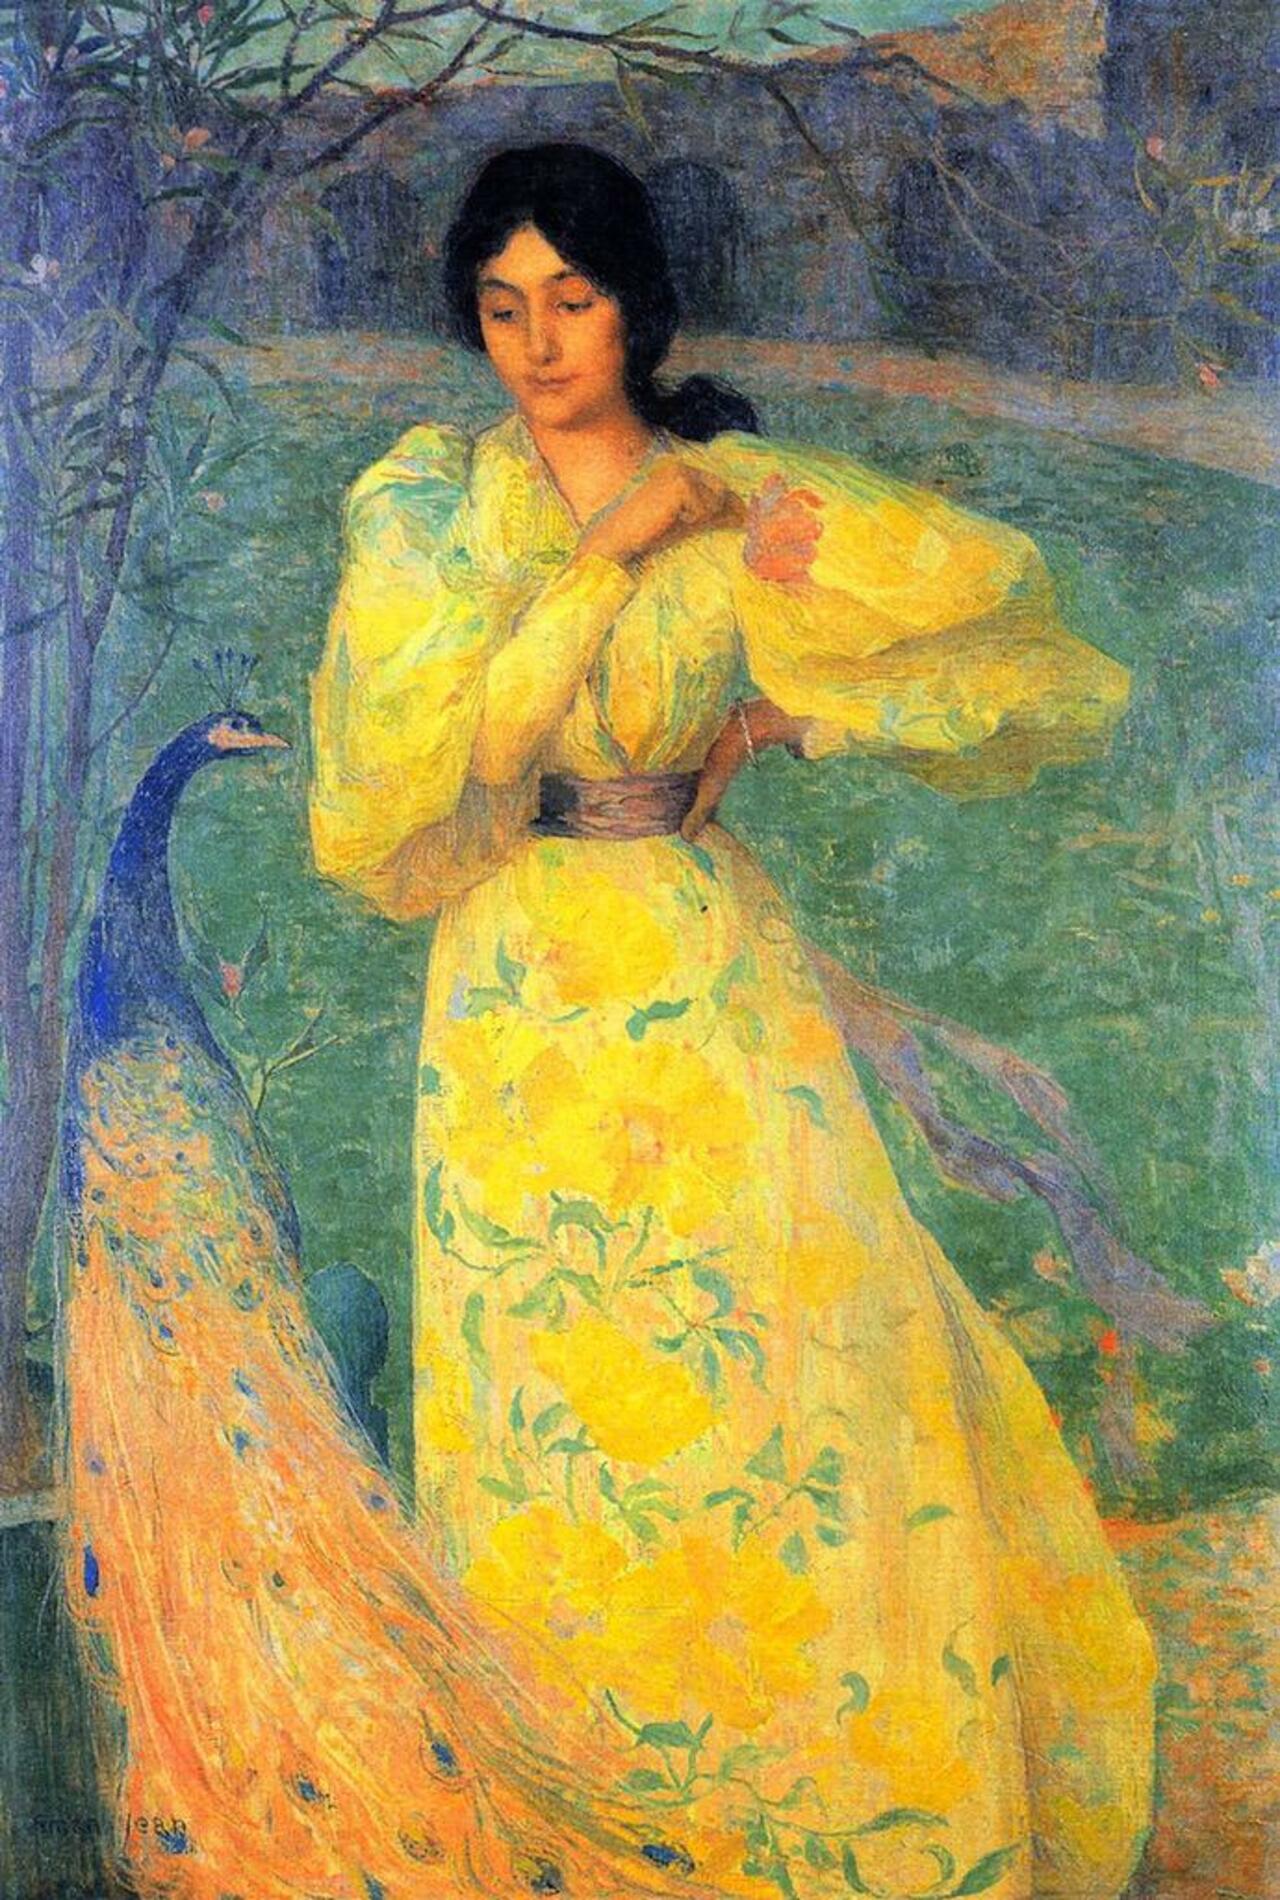 Woman with Peacock (1895)
Edmond-Francois Aman-Jean http://t.co/FvDilY84M0